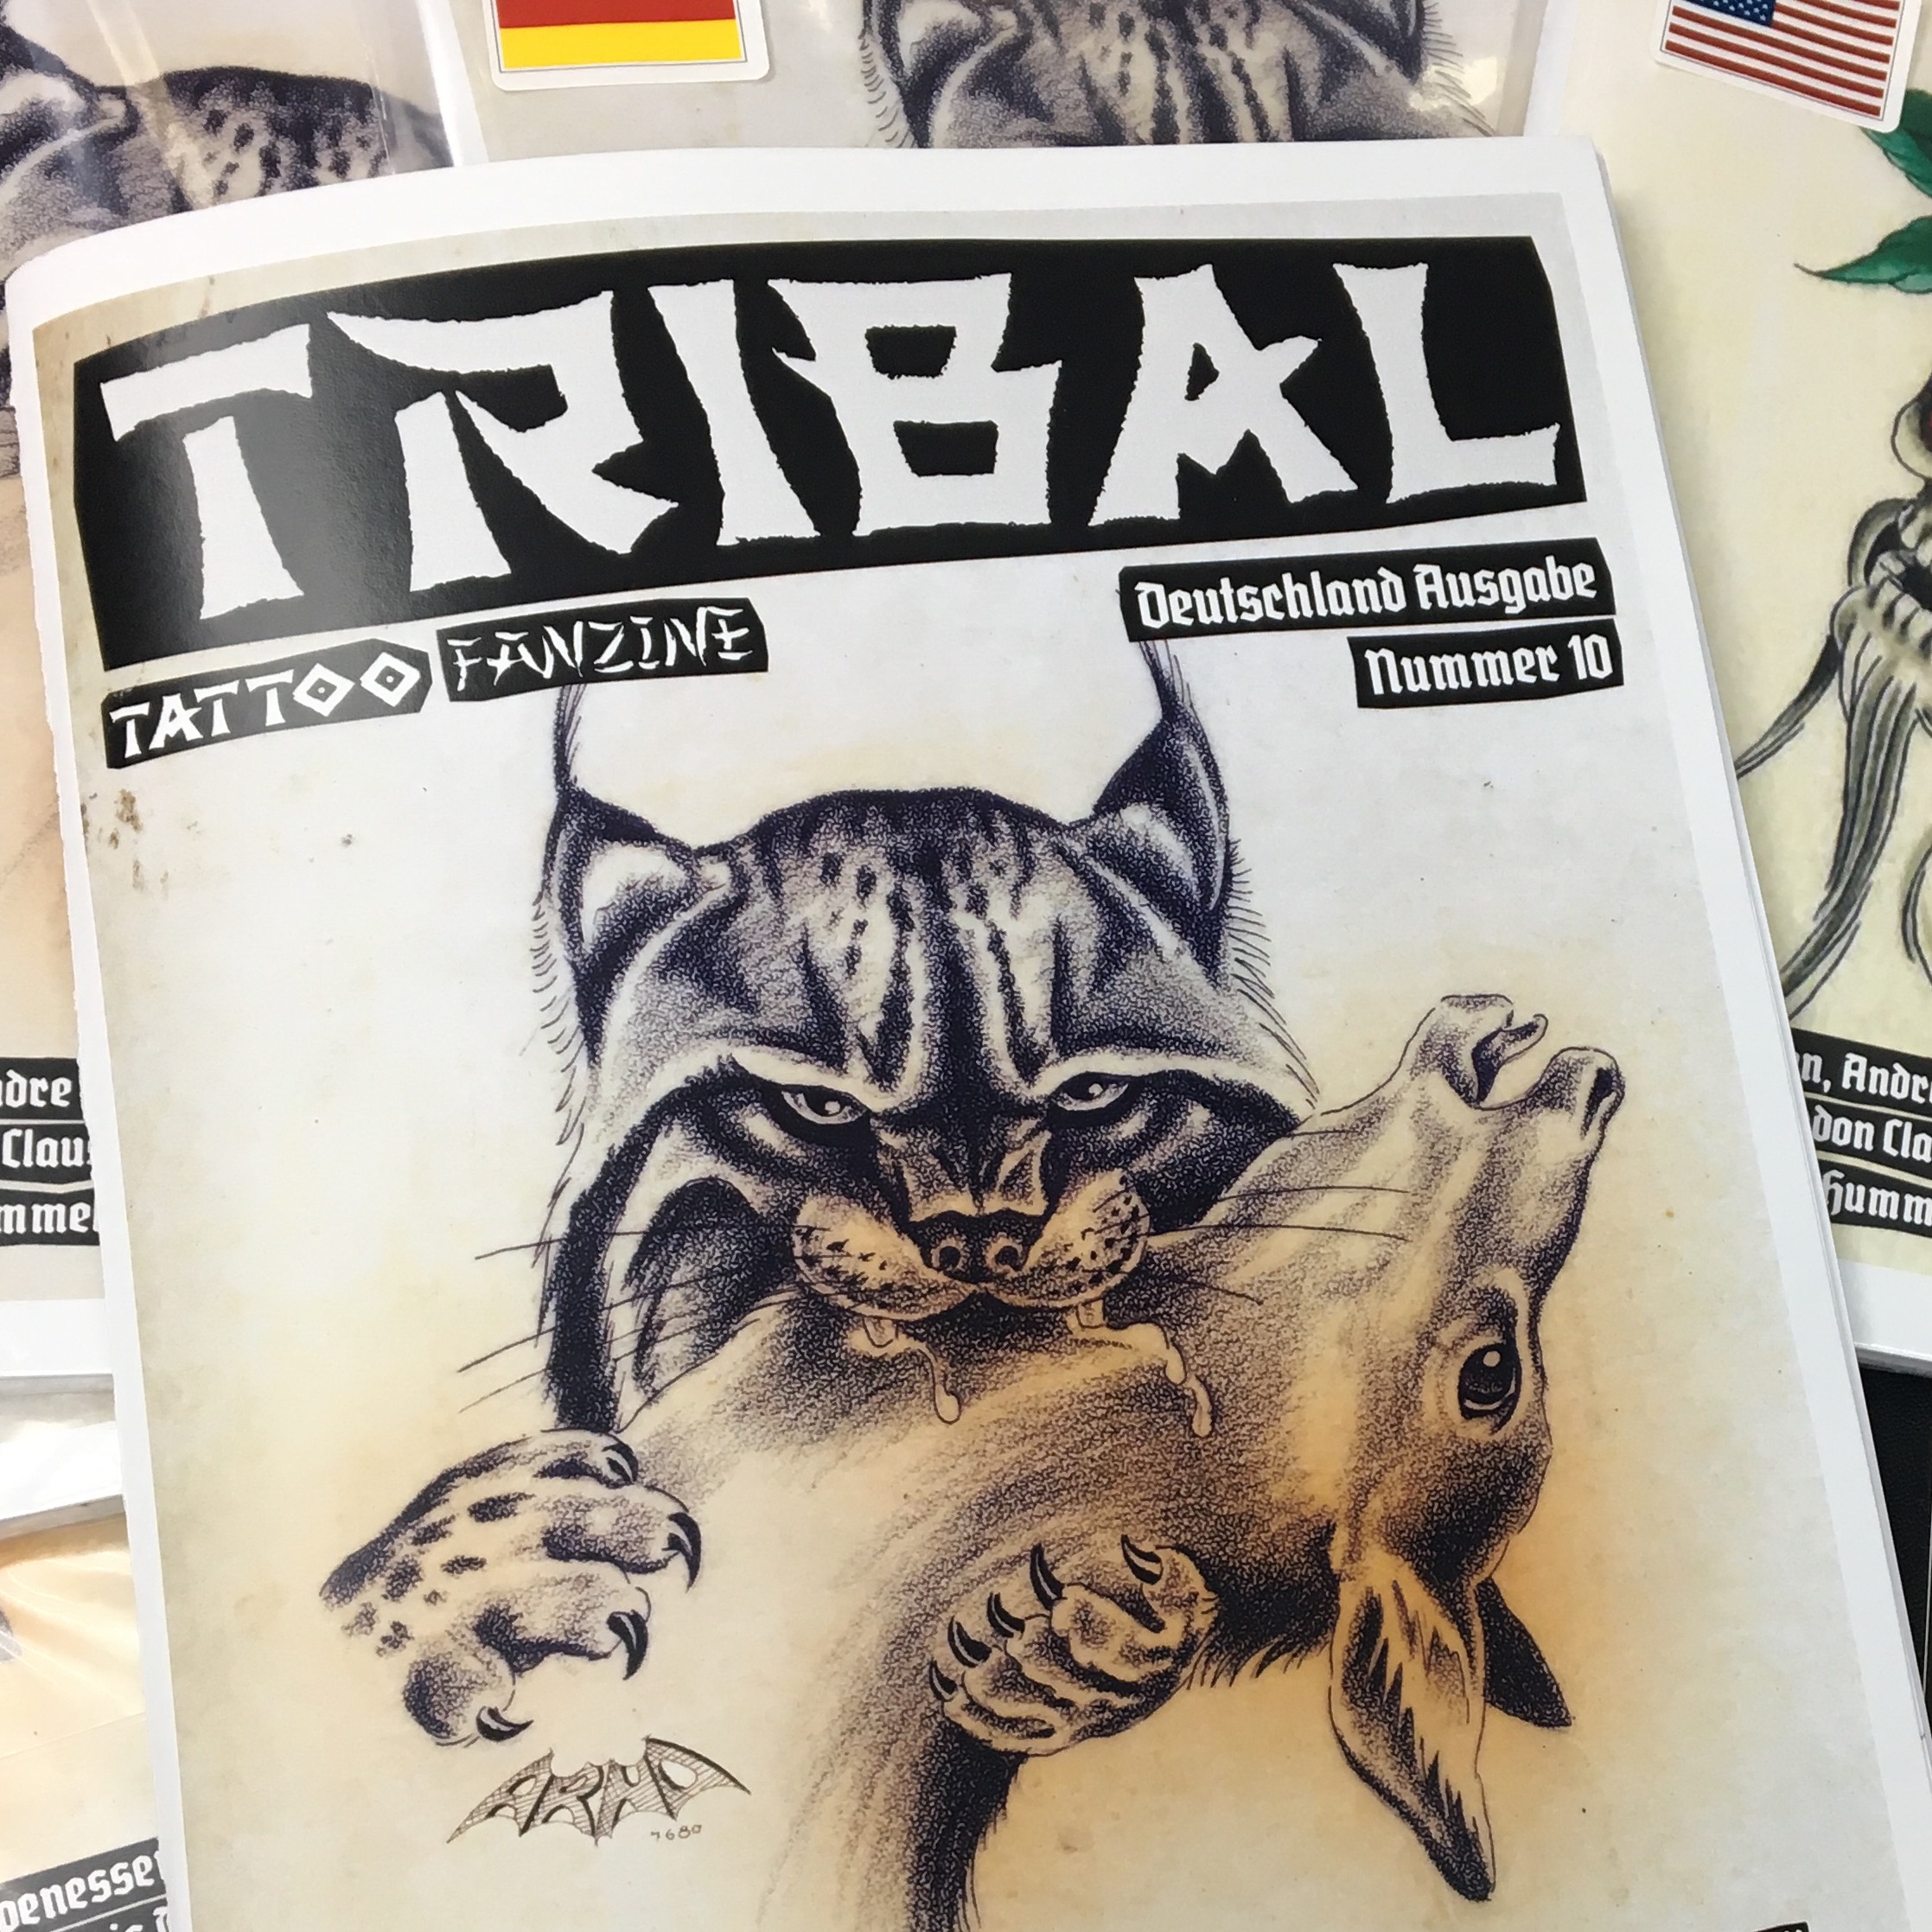 Tribal Tattoo Fanzine # 10 “The Germans”